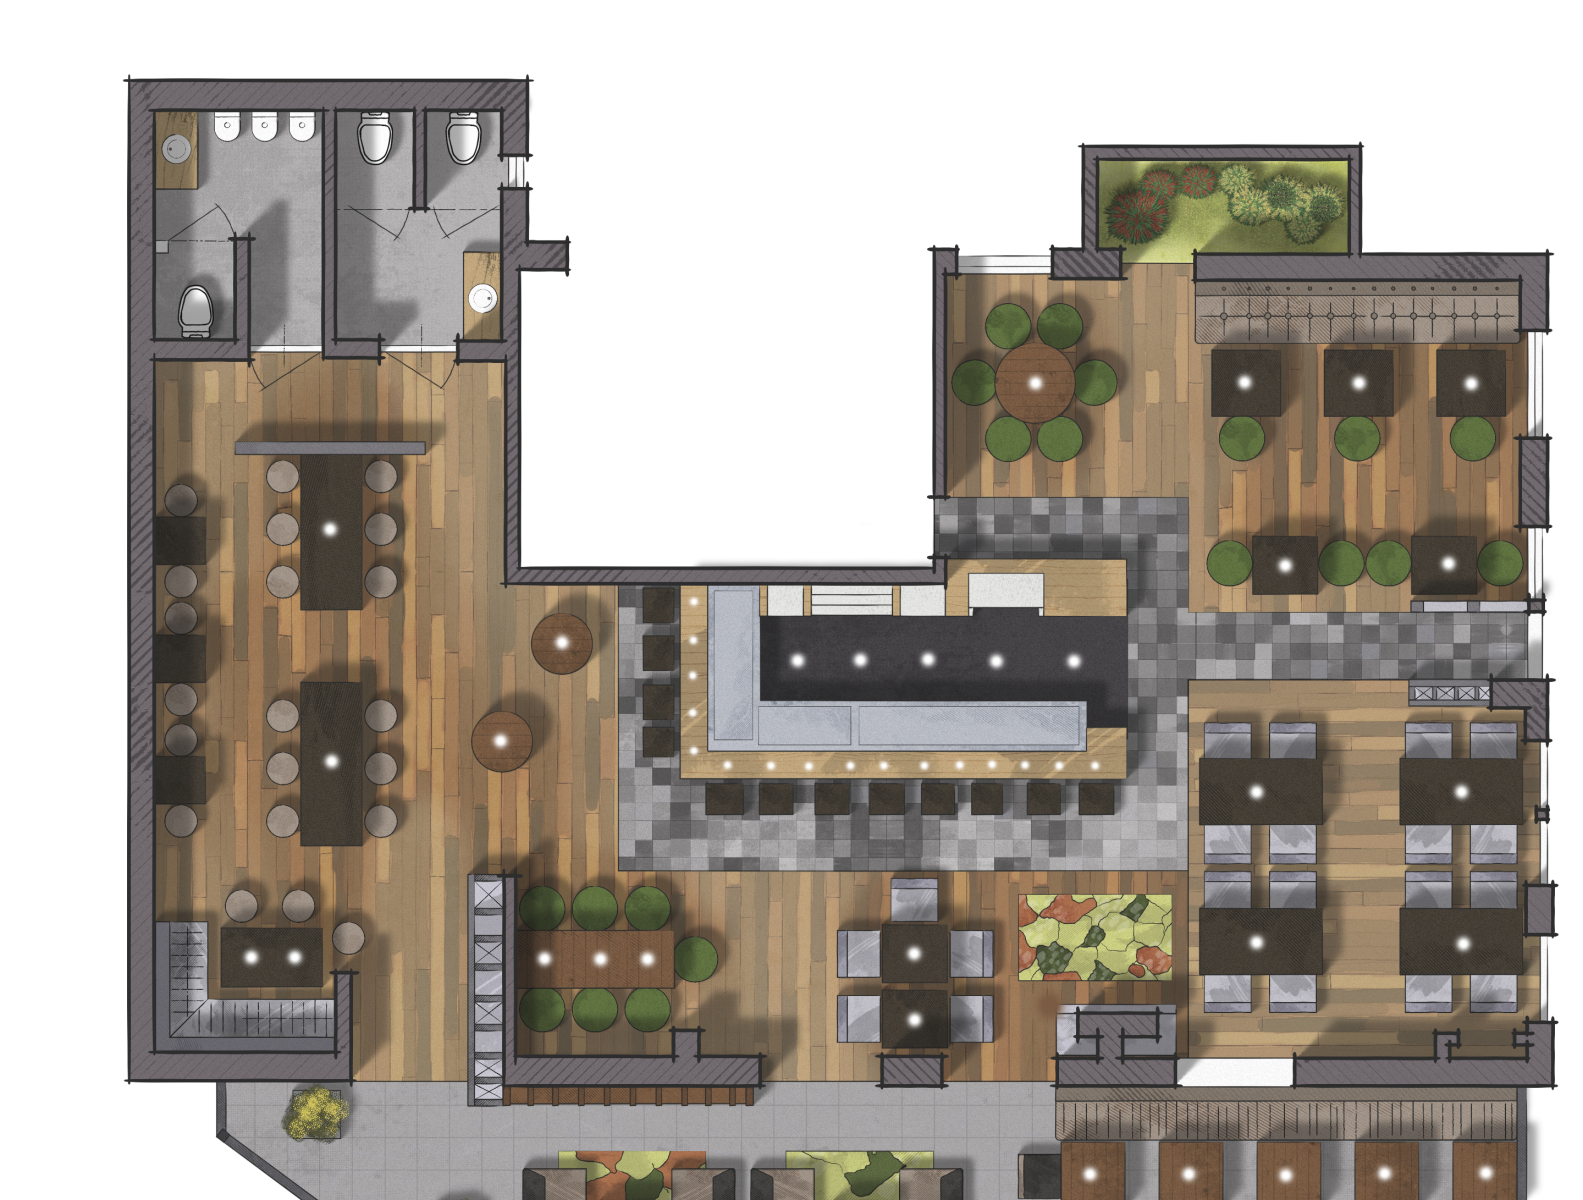 Restaurant Design Floor Plan - Cafe and Restaurant Idea